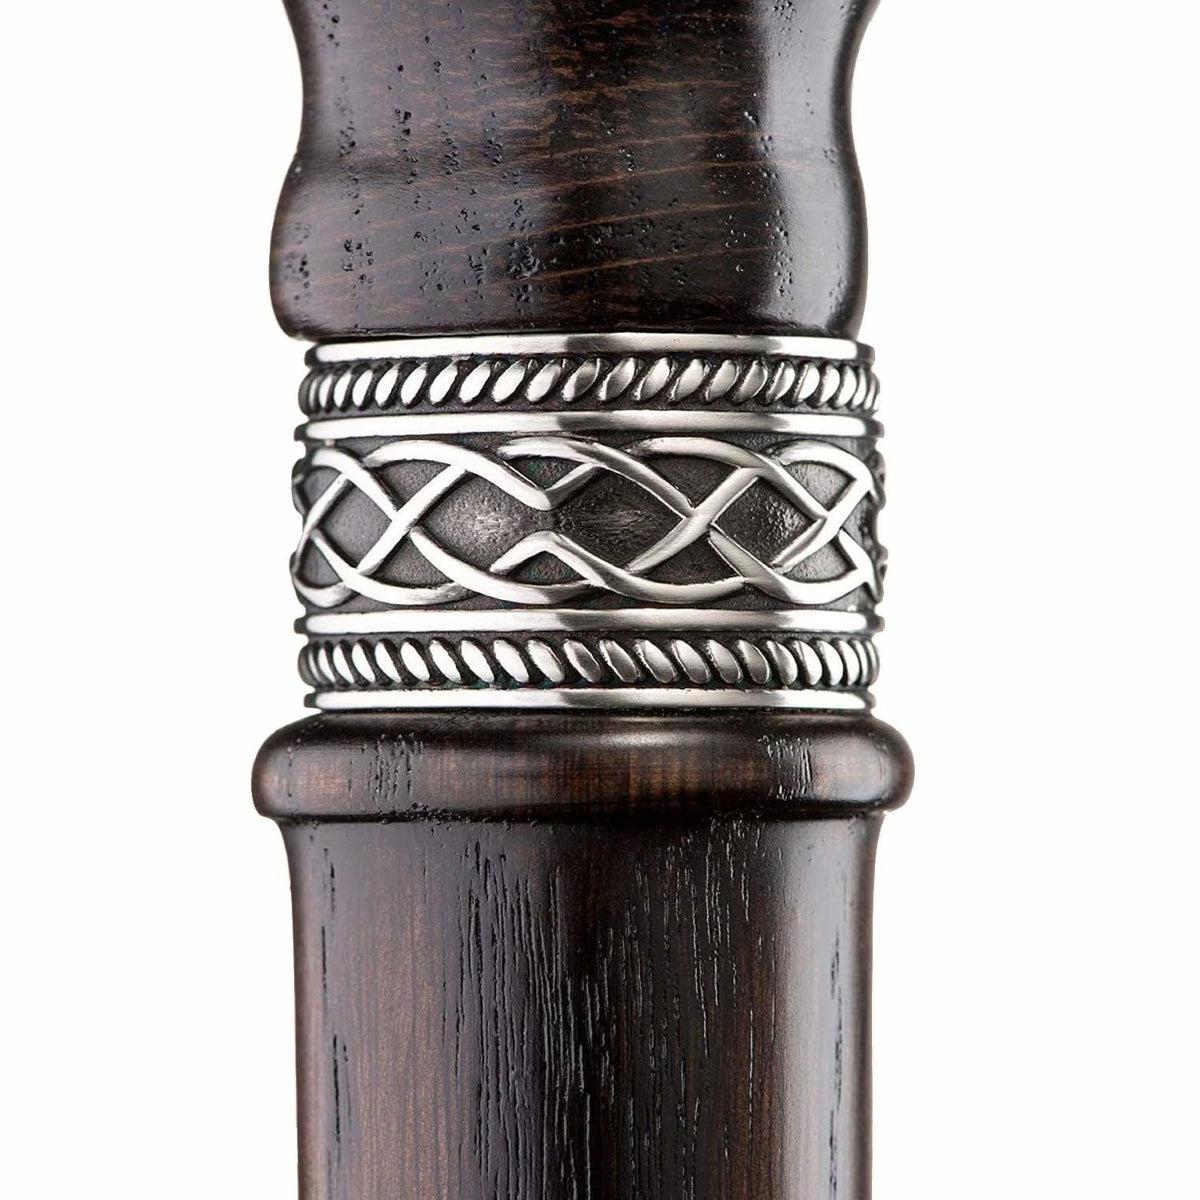 Wooden Hand Carved Eagle Cane or Walking Stick